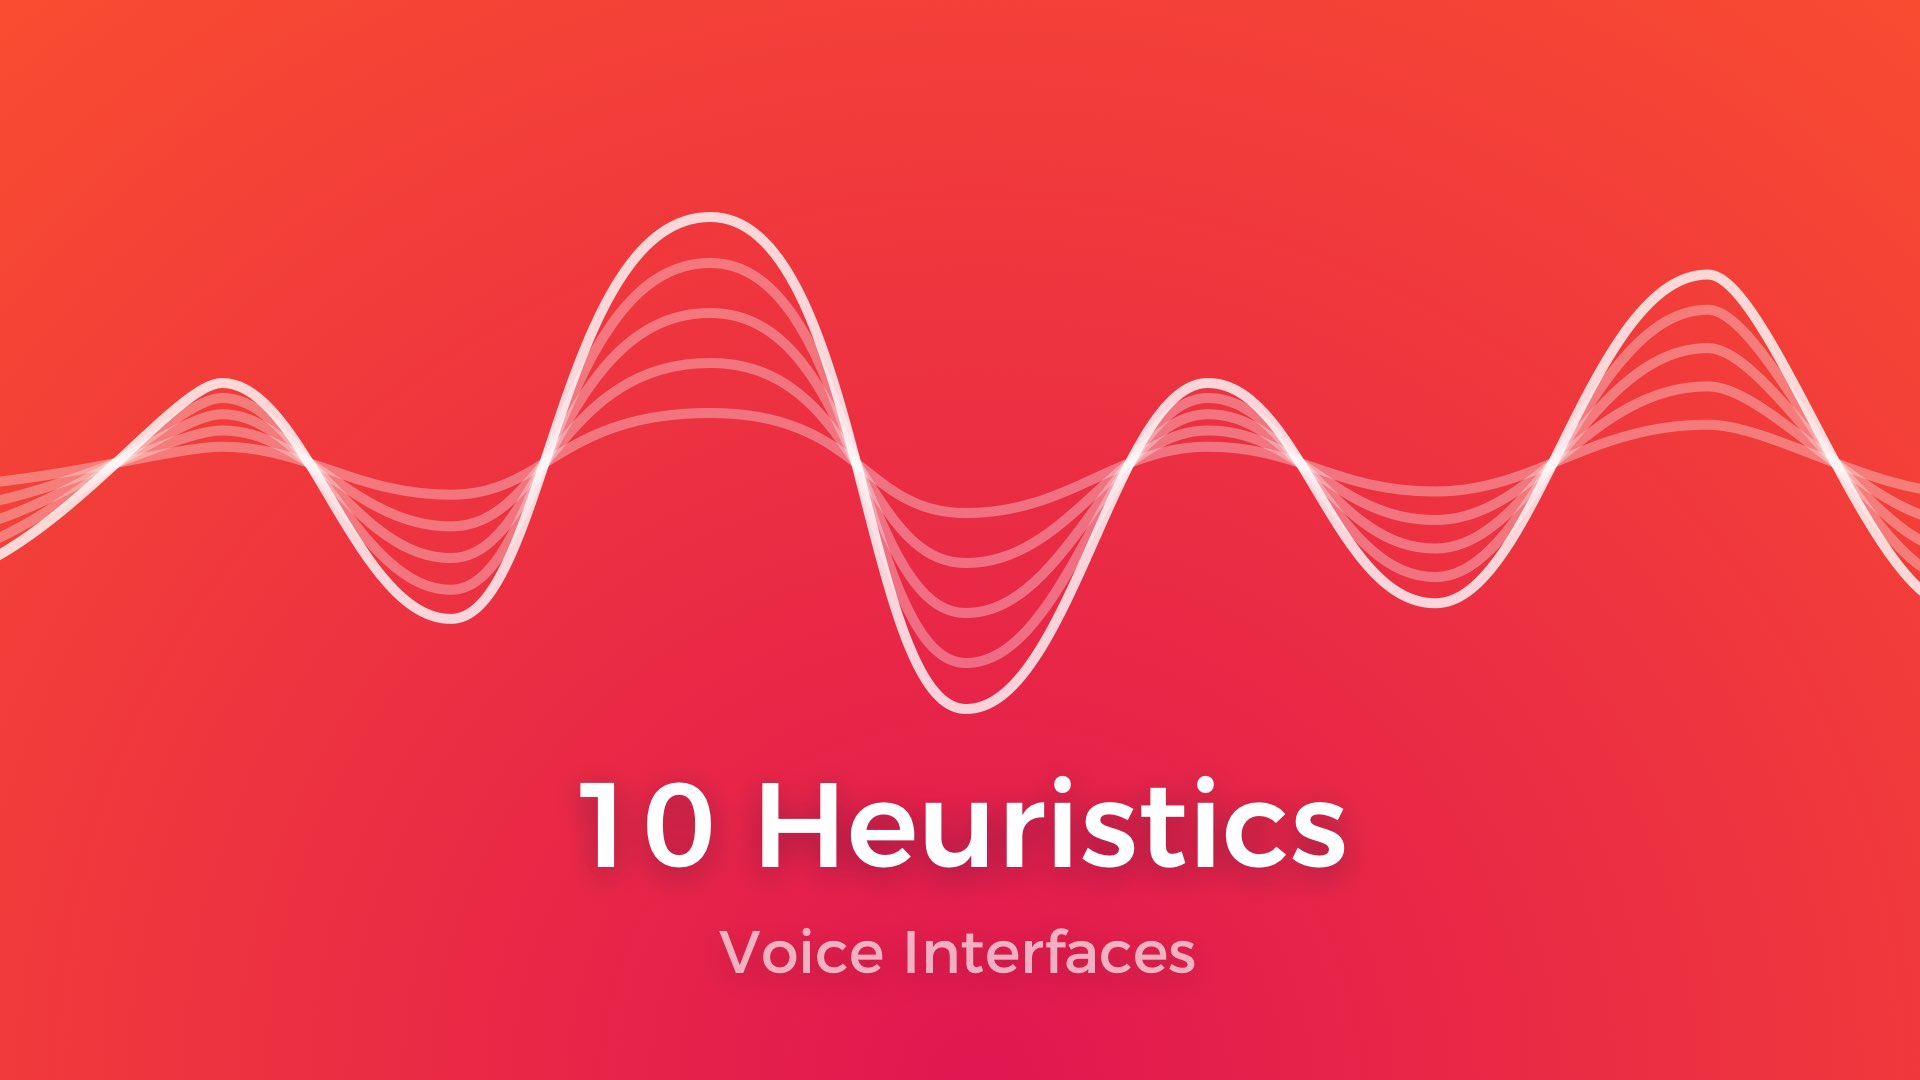 Voice interfaces. Voice логотип. Интерфейс “Voice Vision”. The Voices. Heuristics.